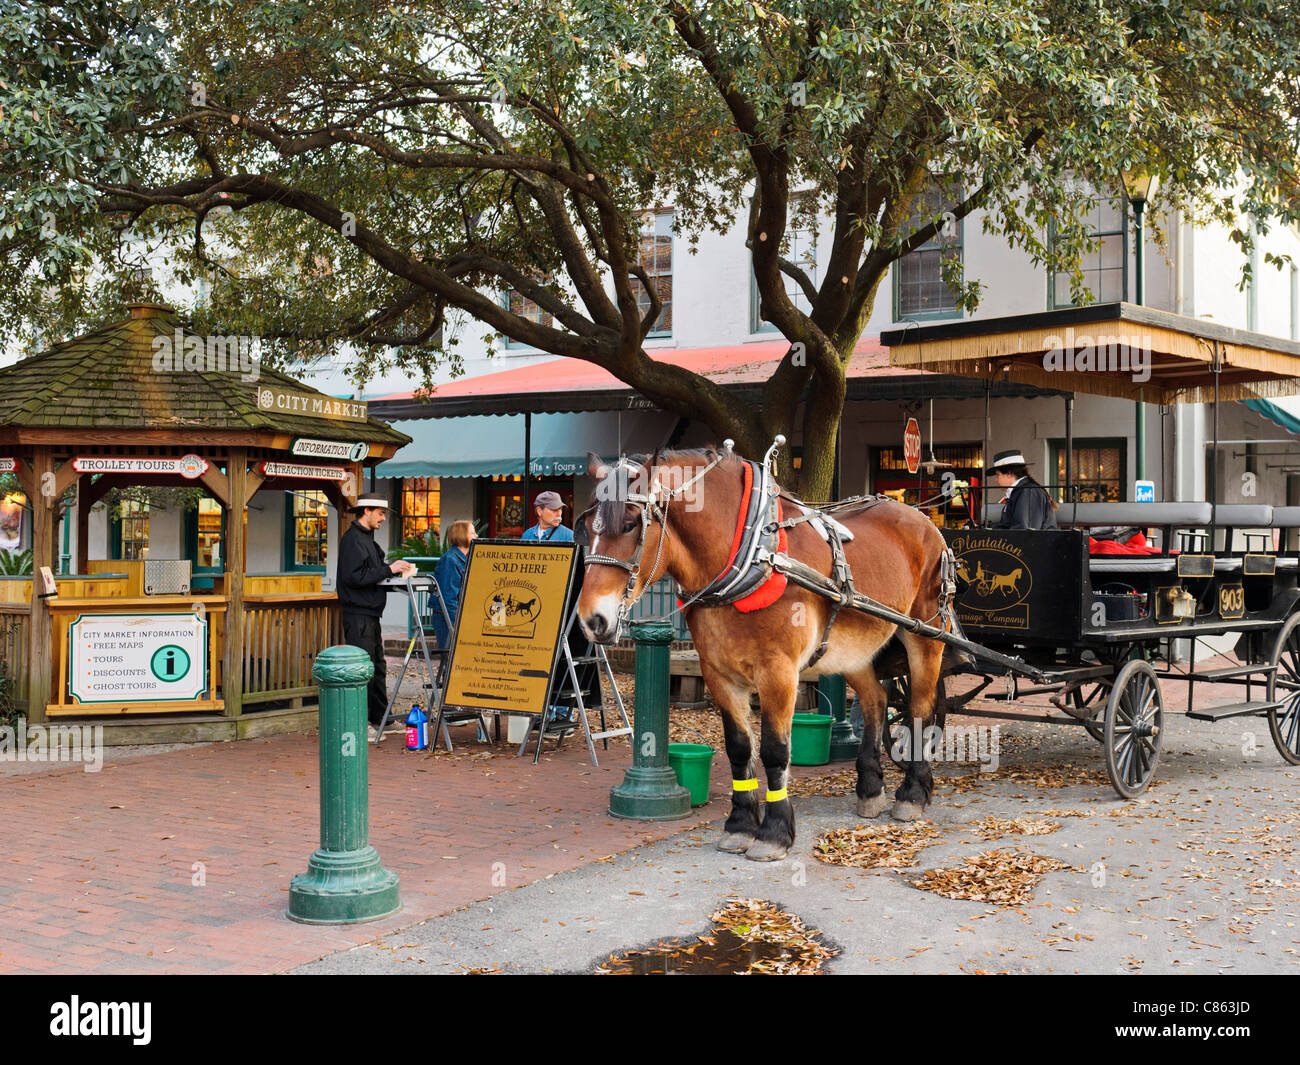 City Market, Savannah Stock Photo